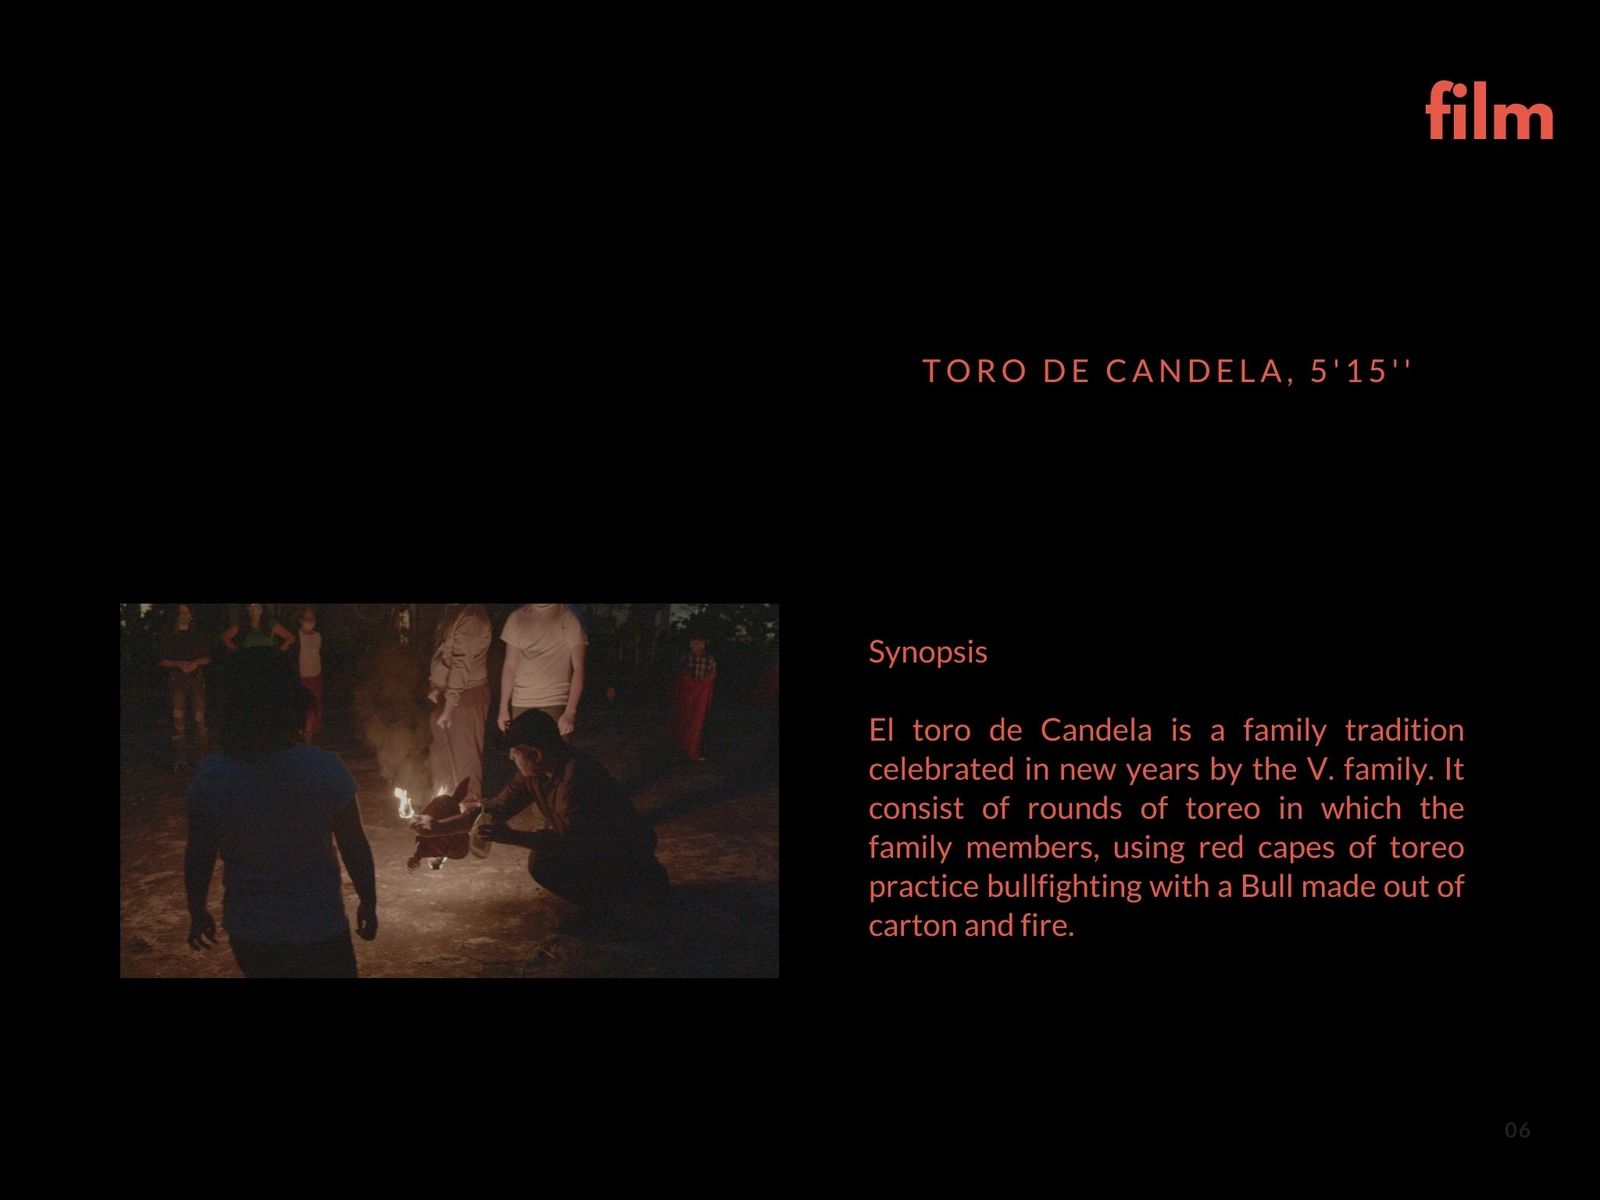 © Margarita V Beltran - Toro de candela is a family game of the V Family. to watch the video https://www.margaritavaldivieso.net/toro-de-candela